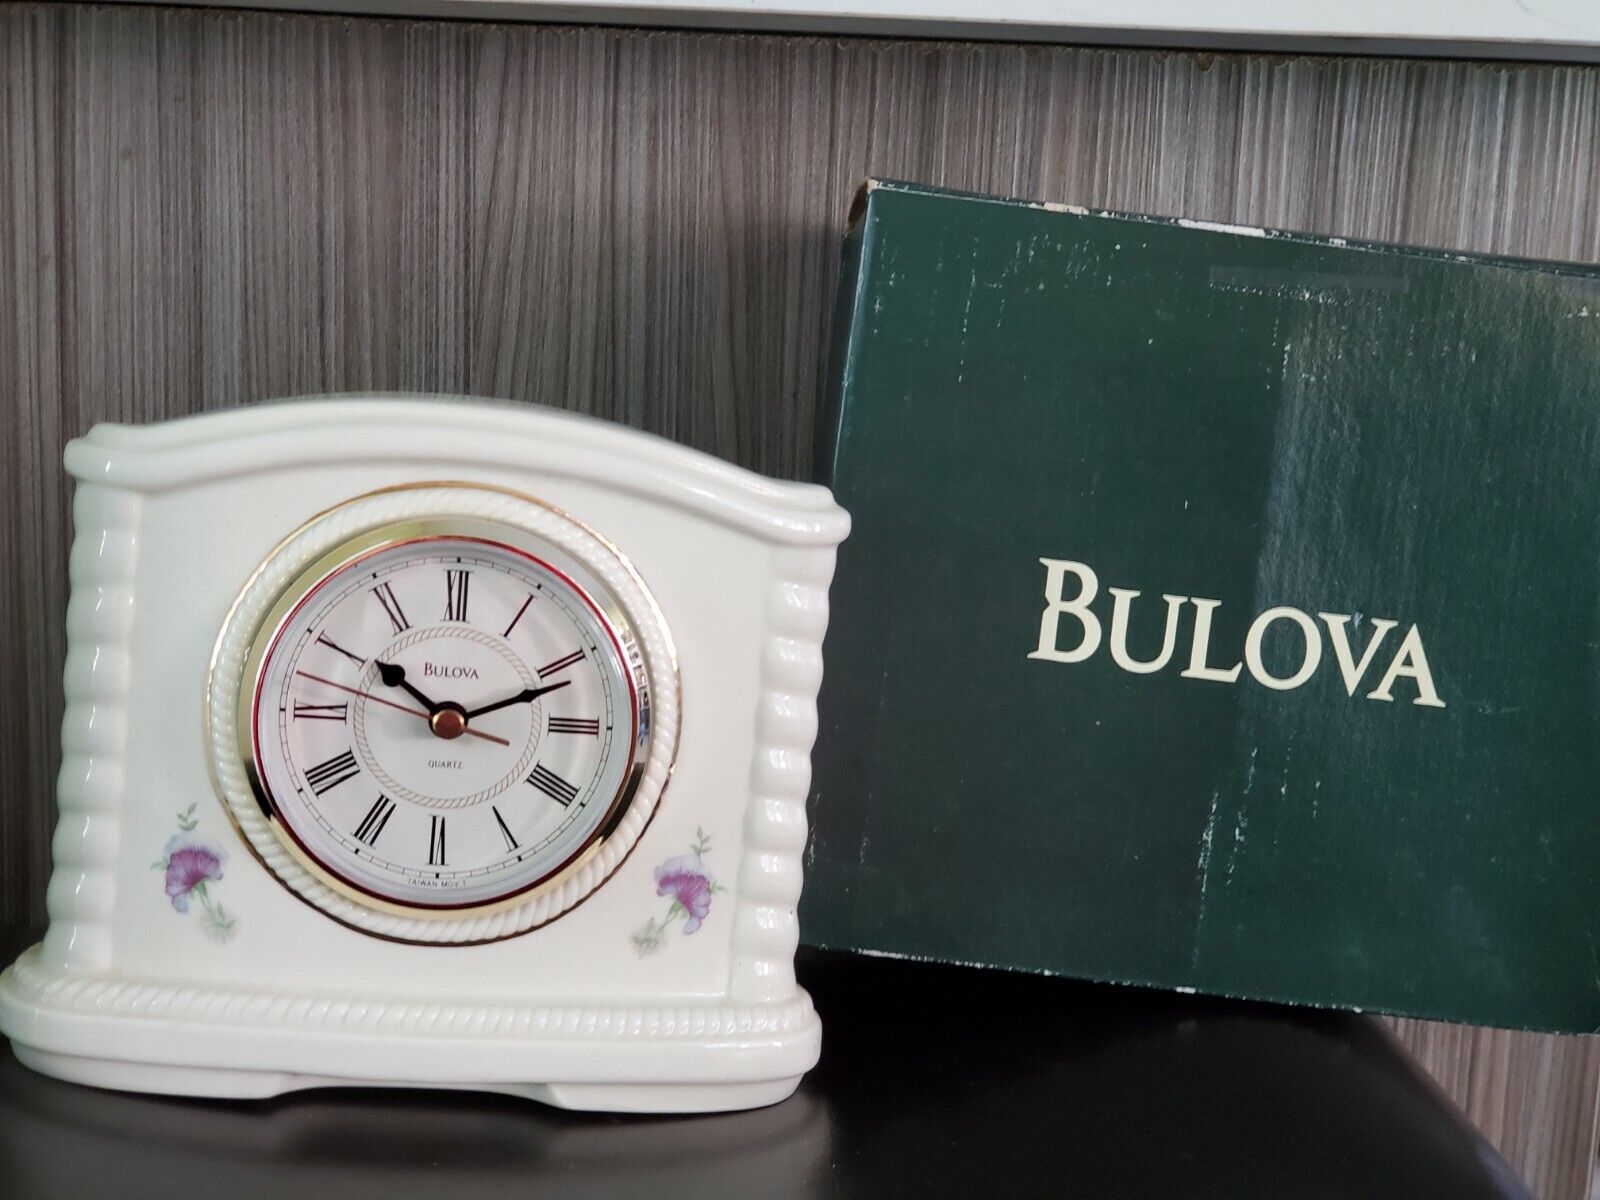 Bulova Porcelain Mantle Desk Clock Made in Taiwan in original box